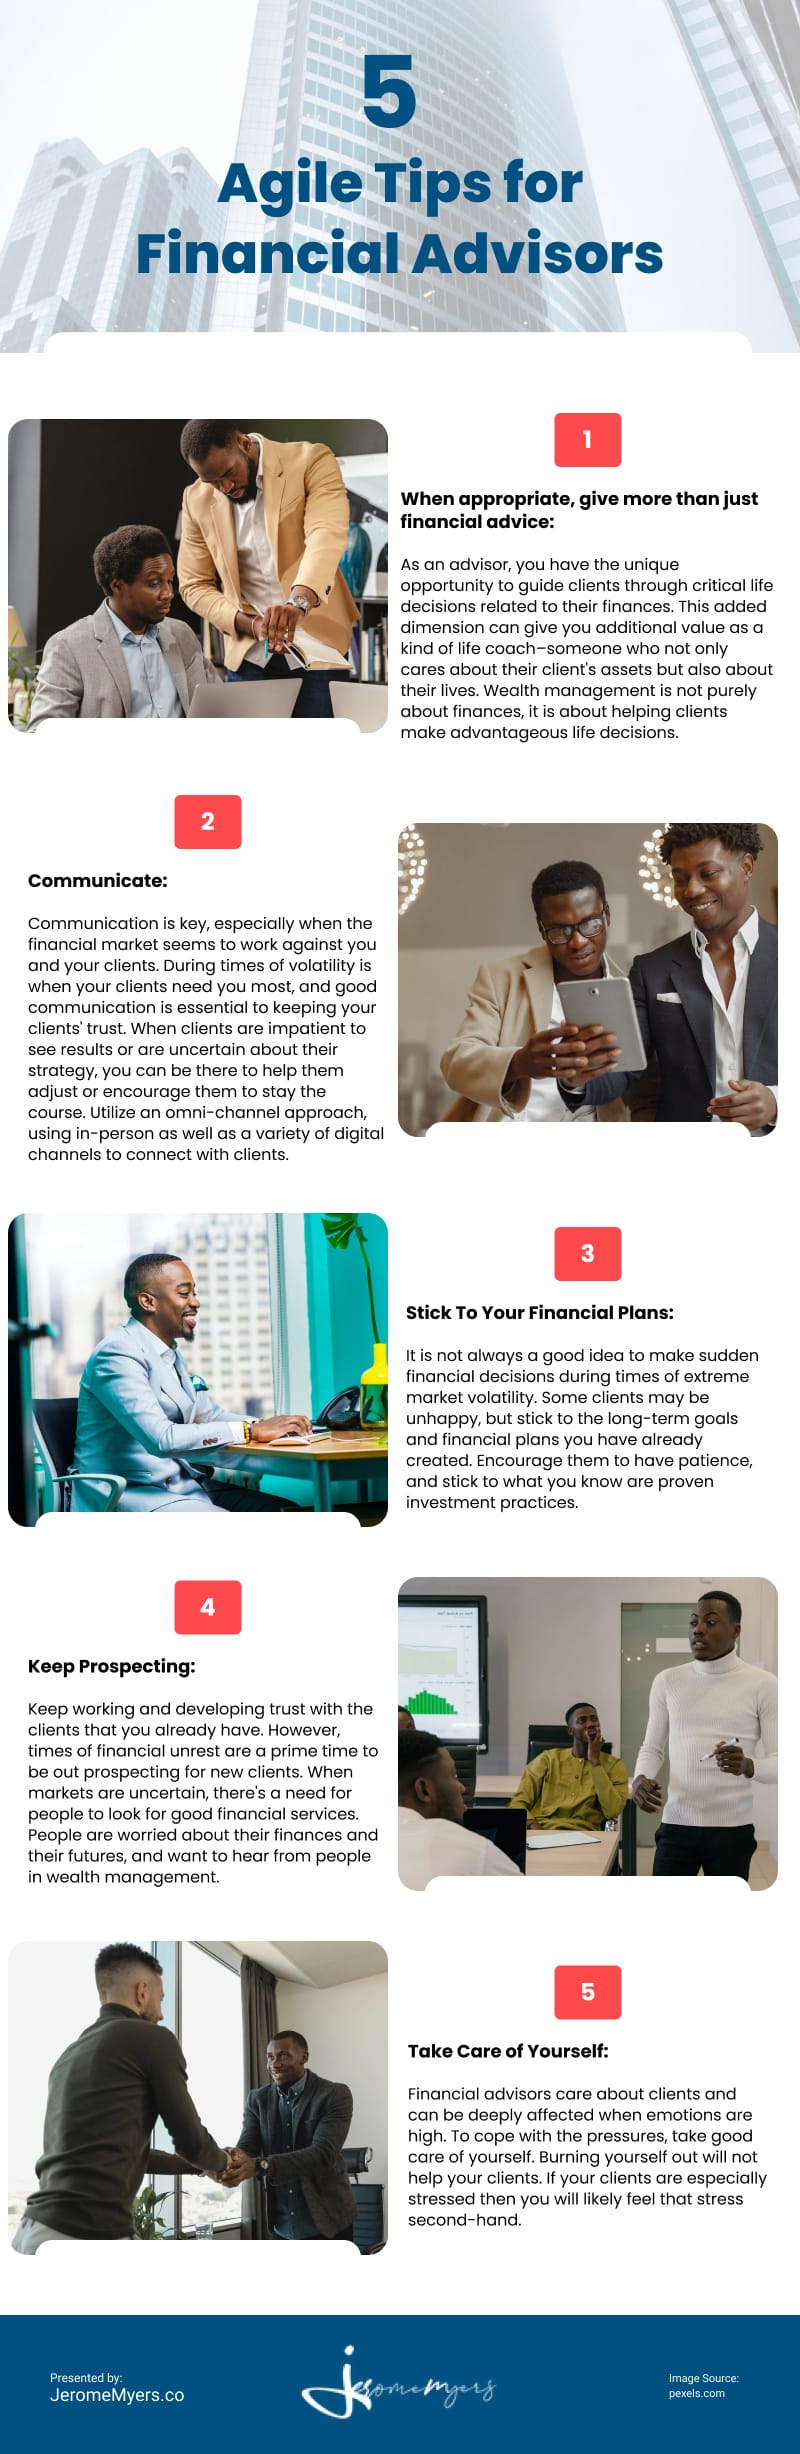 5 Agile Tips for Financial Advisors Infographic